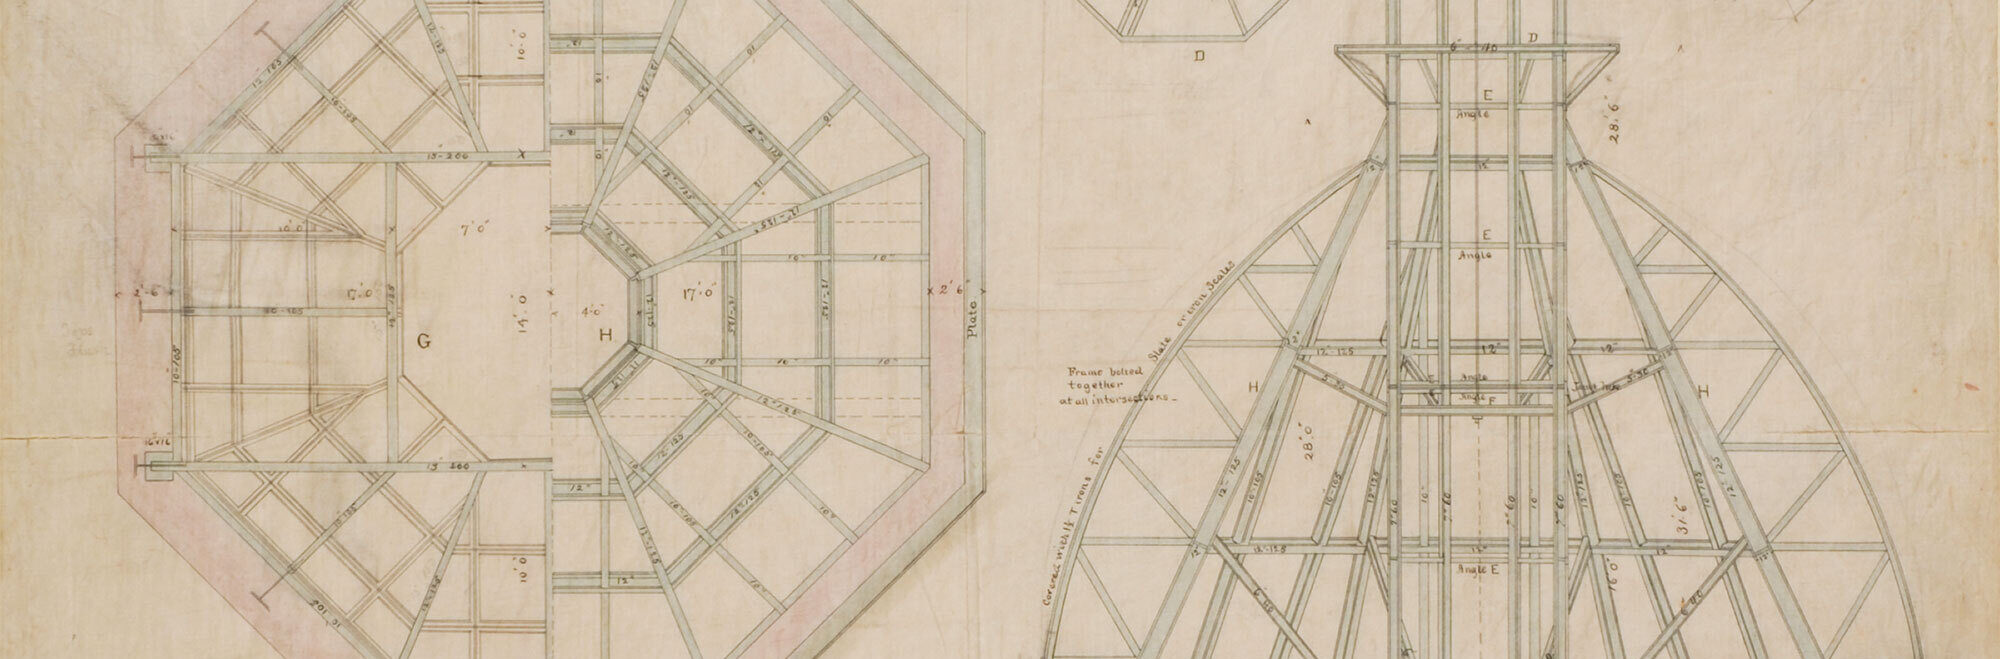 Hopkins dome blueprint